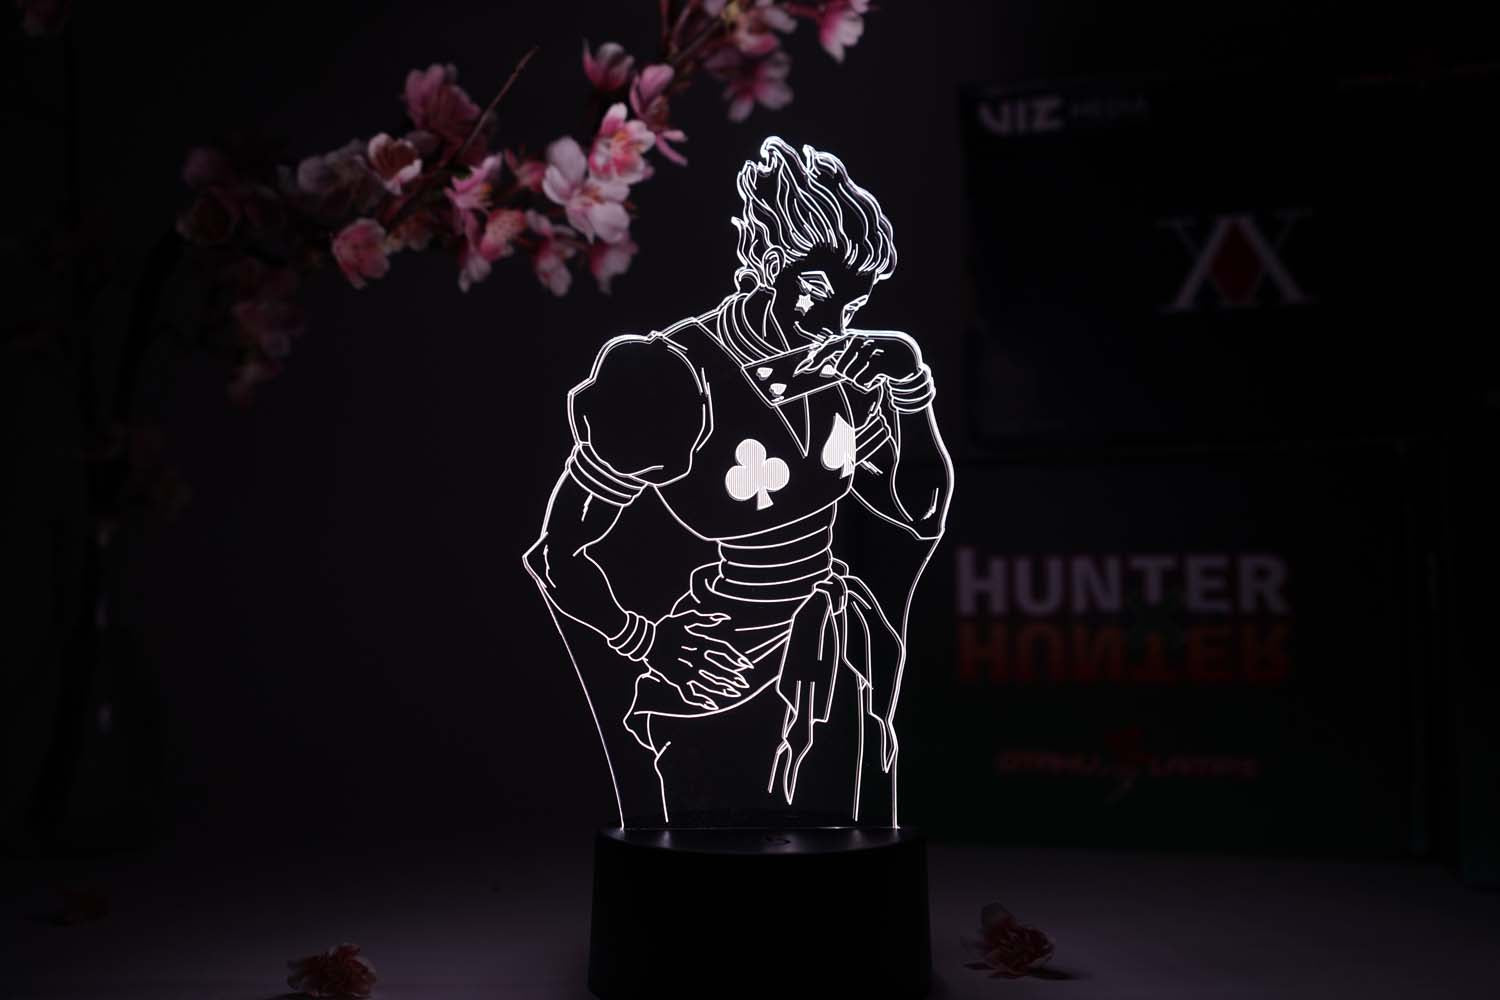 Hisoka Otaku Lamp (Hunter X Hunter)